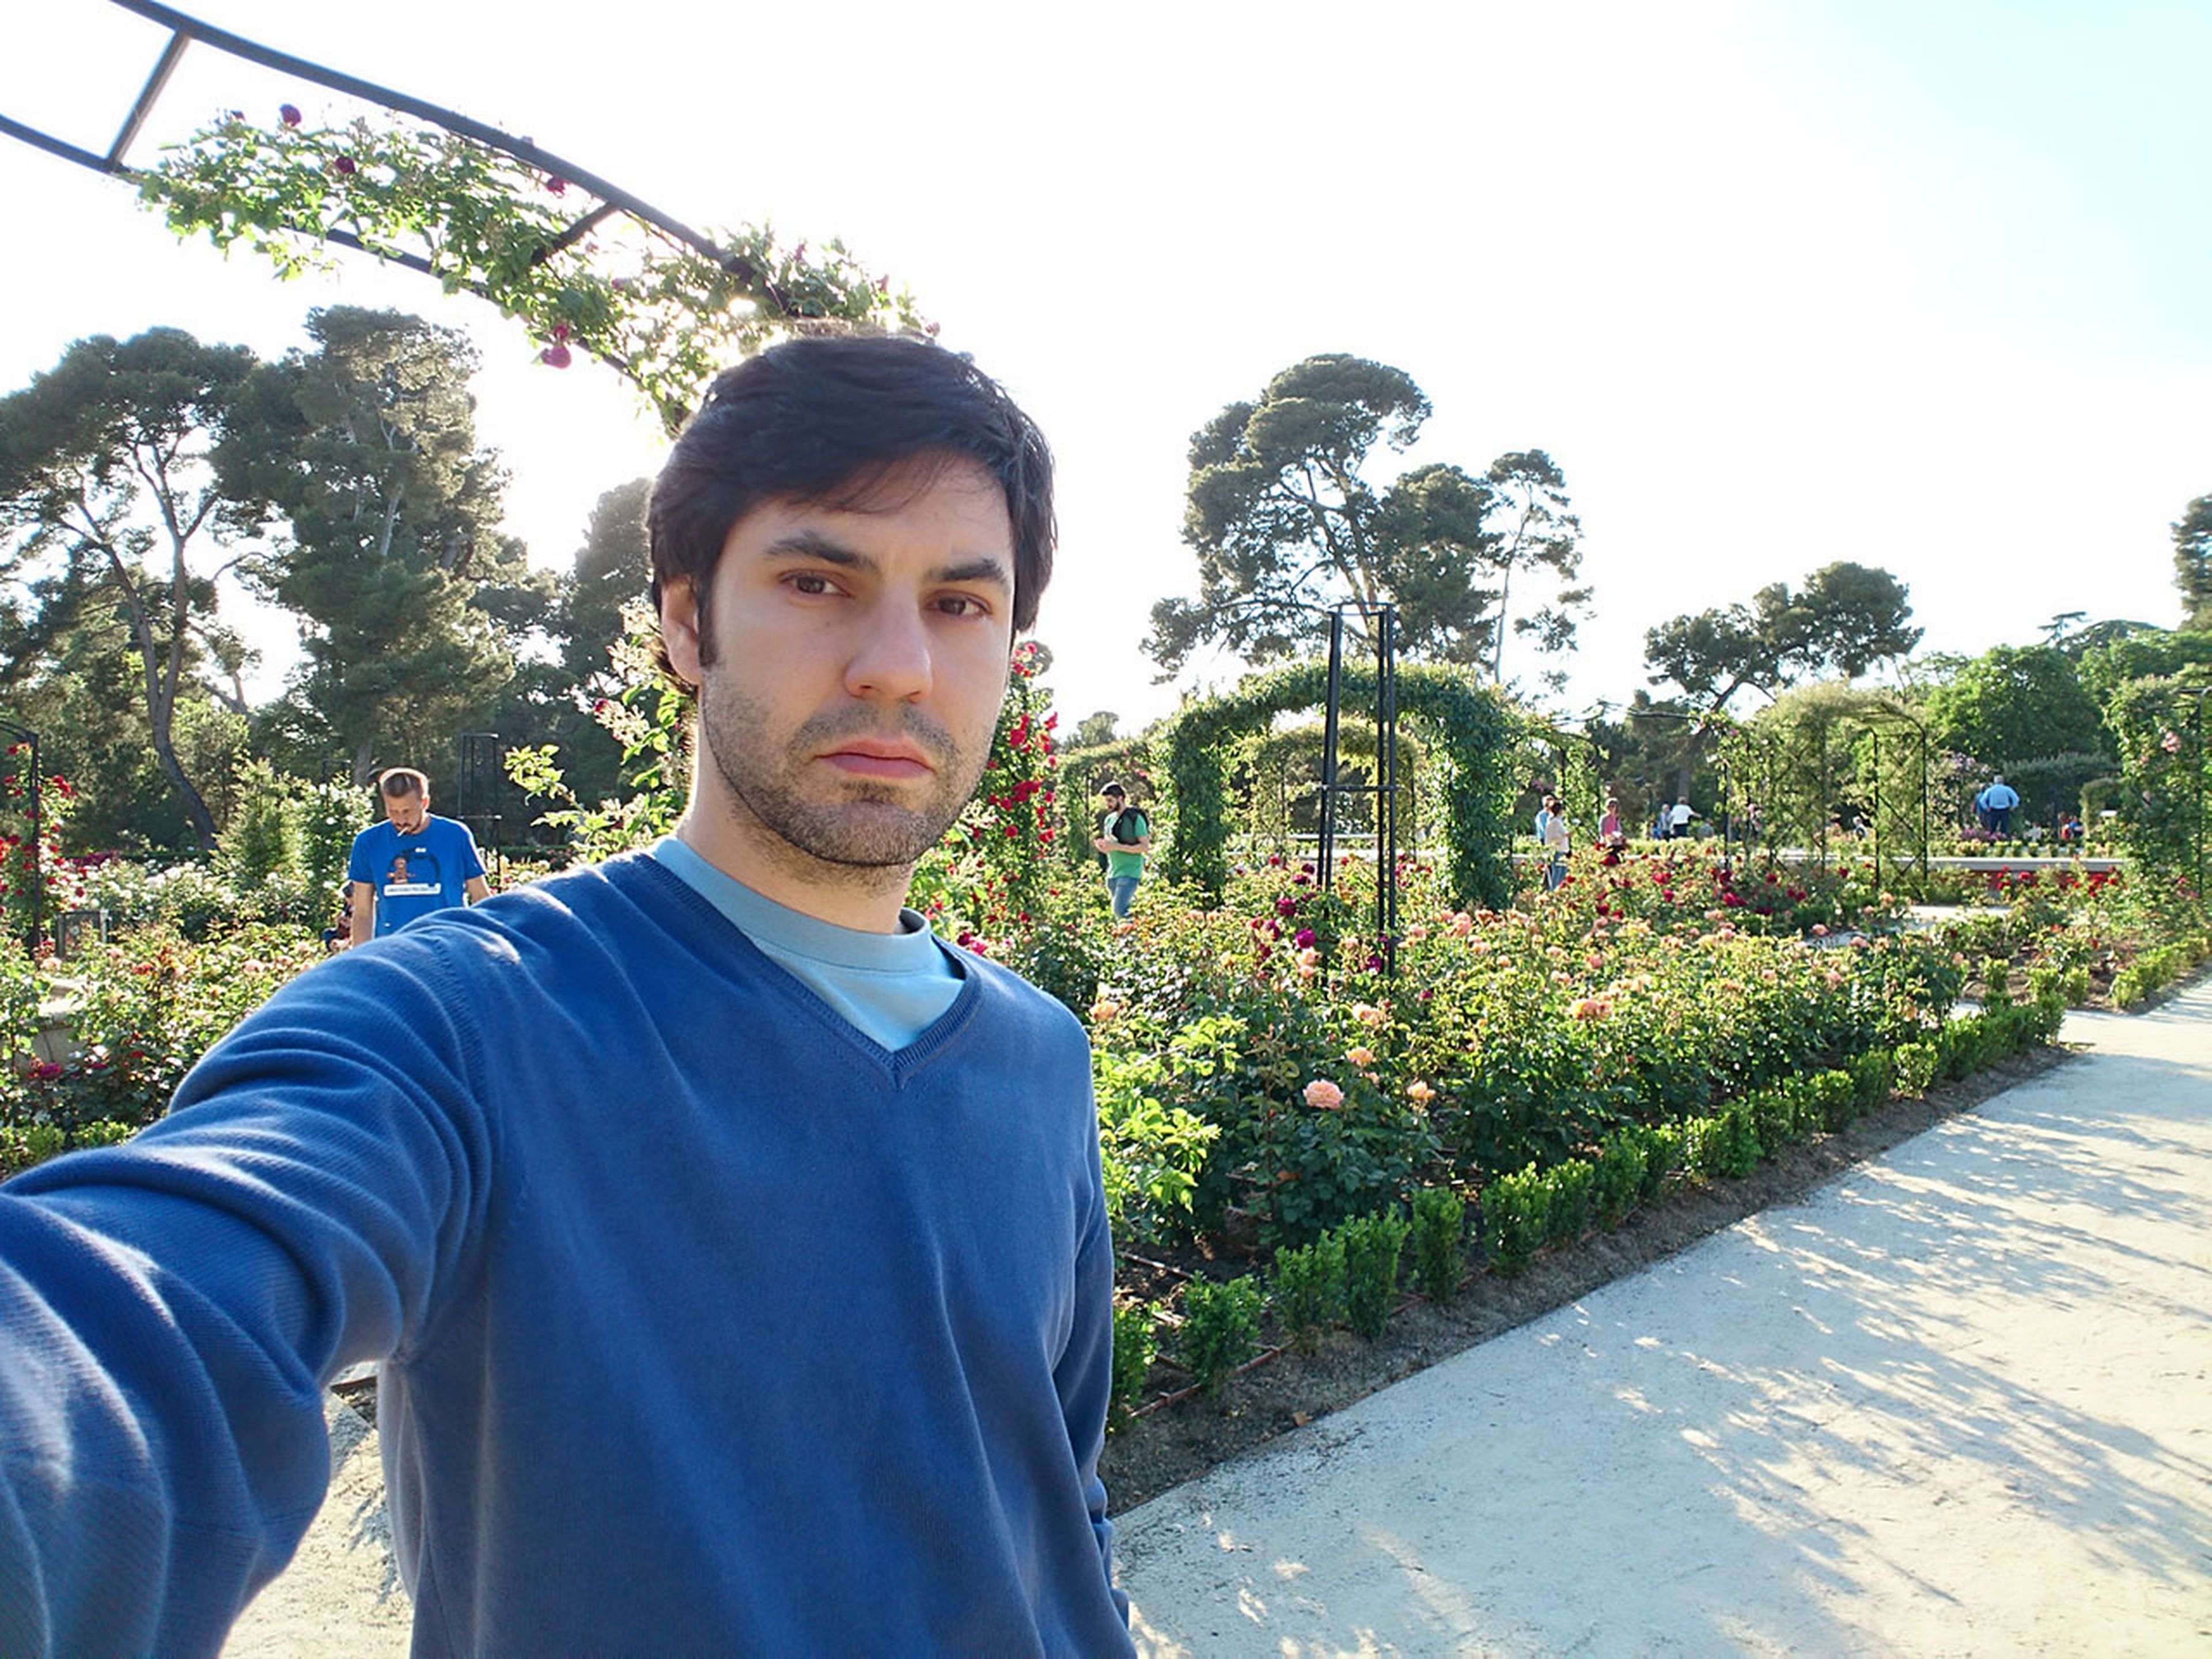 Sony Xperia X selfie a contraluz